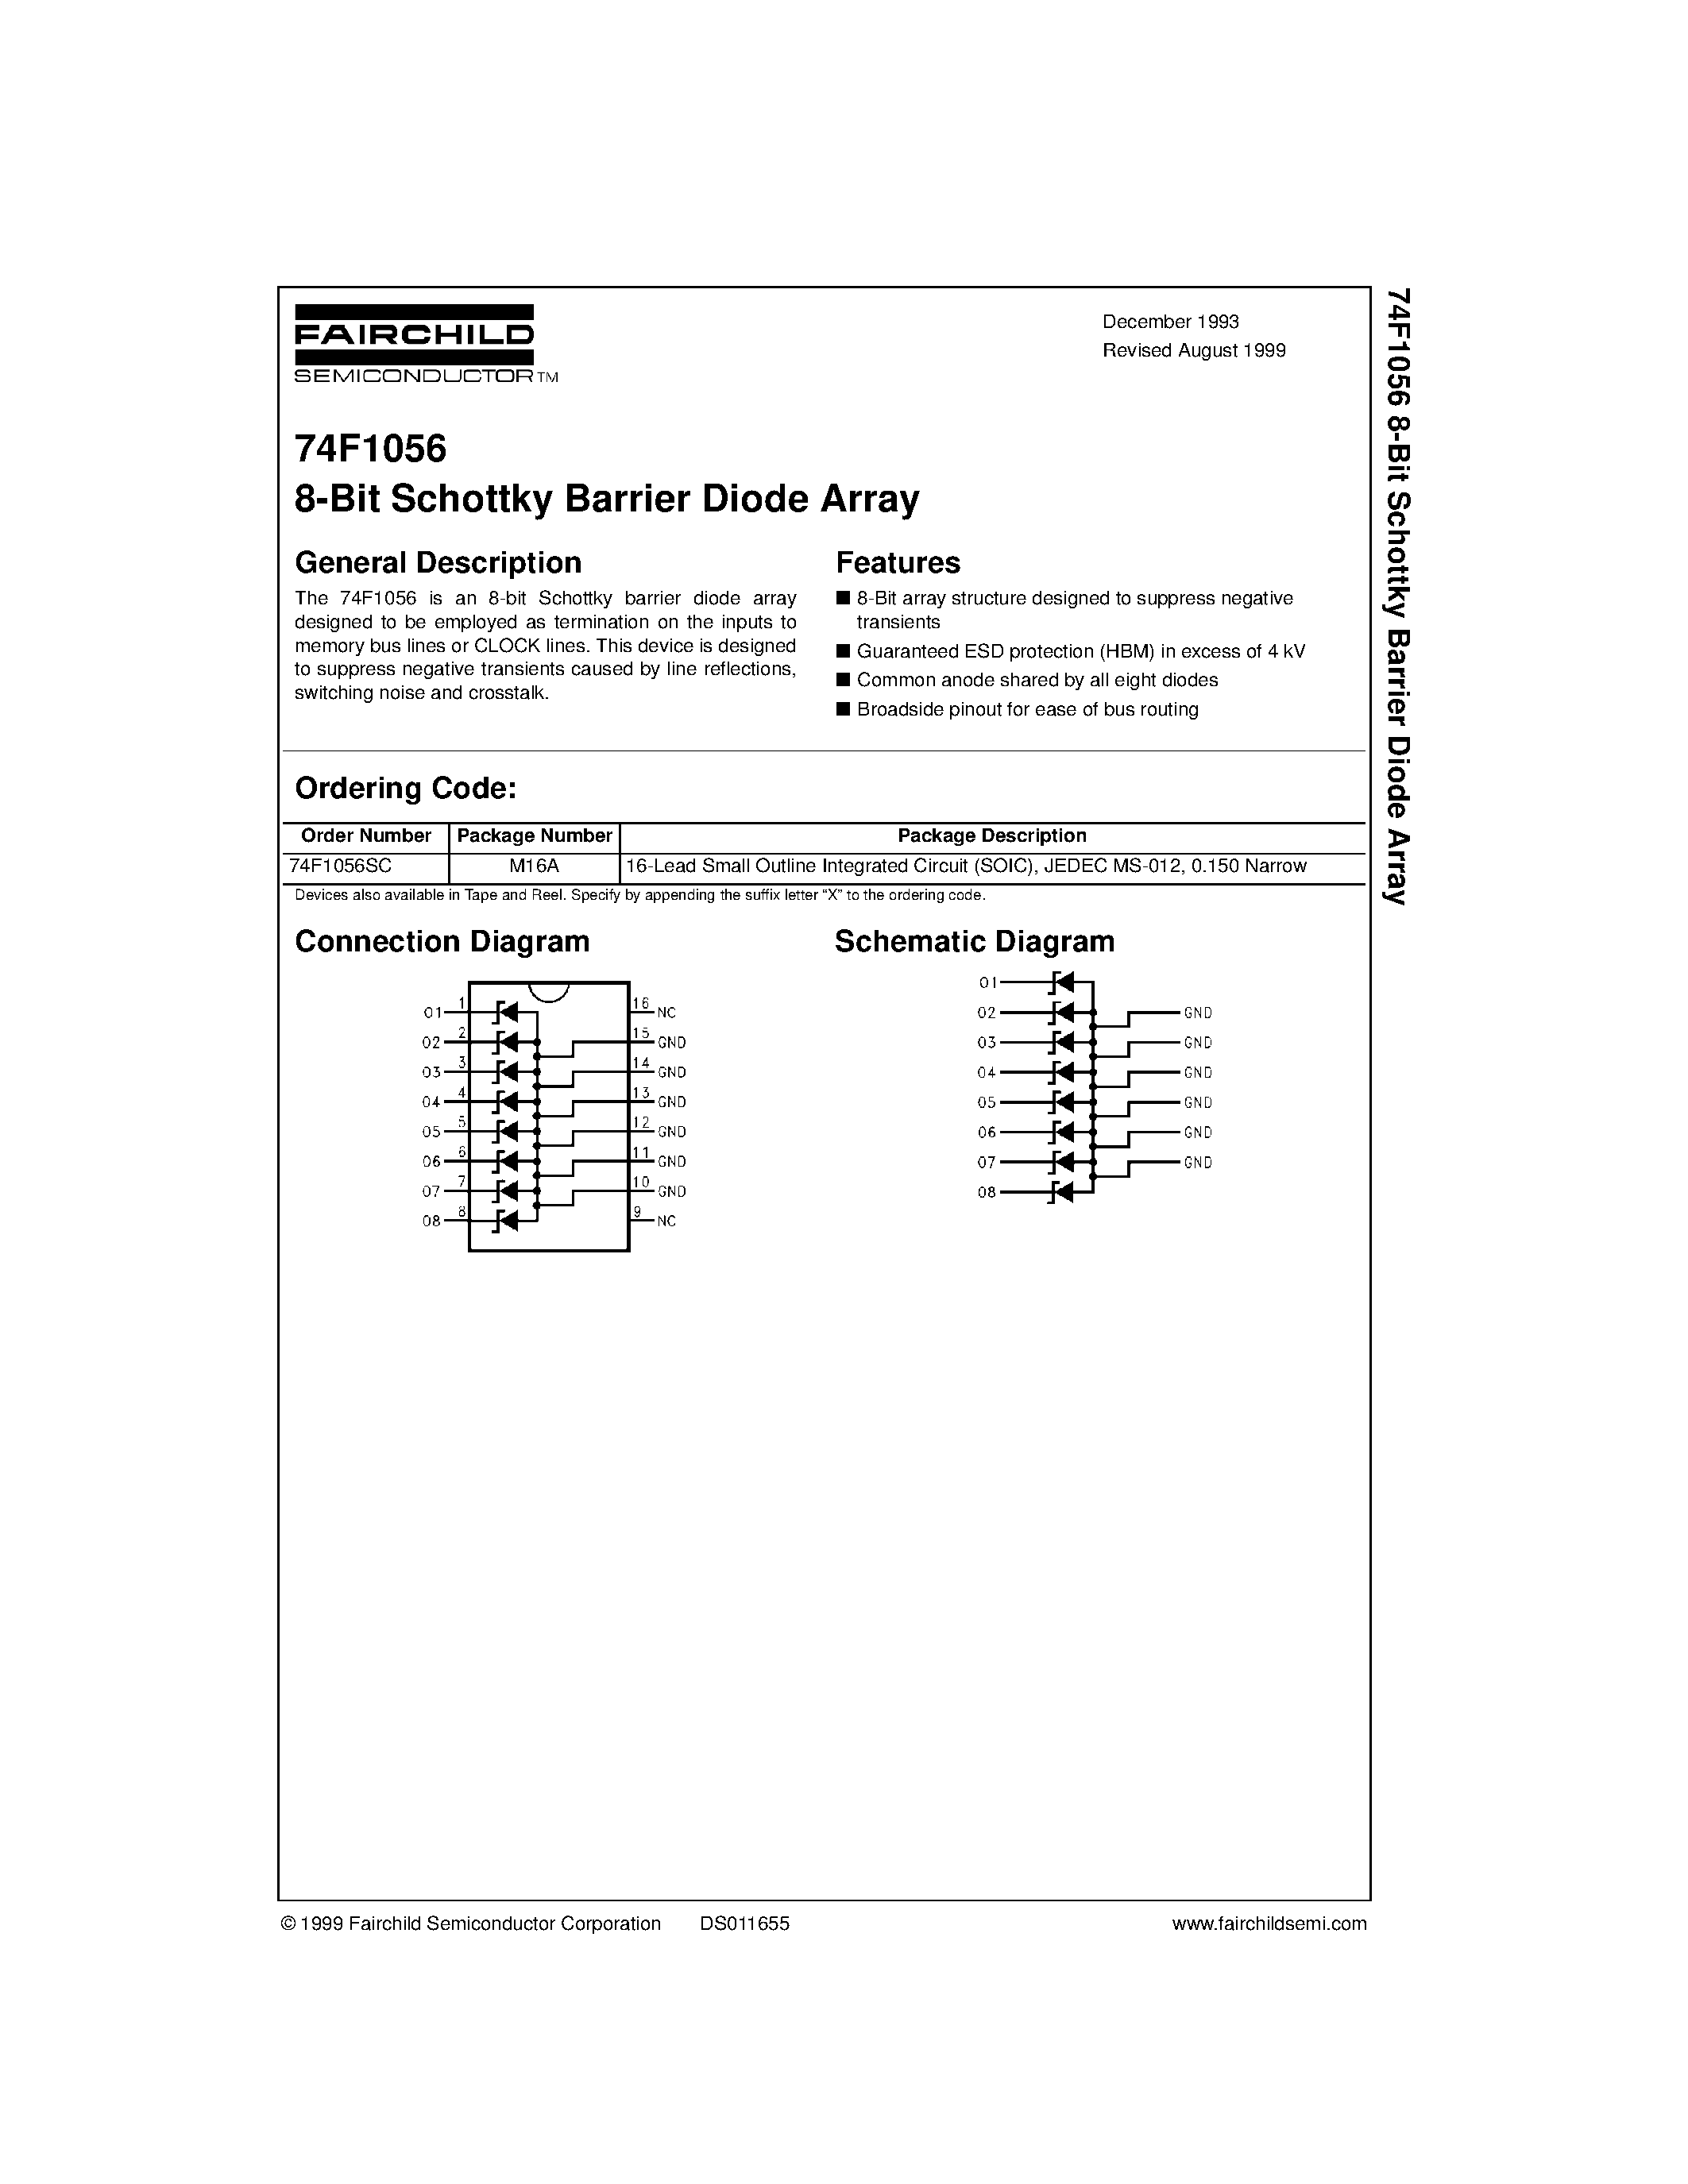 Datasheet 74F1056SC - 8-Bit Schottky Barrier Diode Array page 1